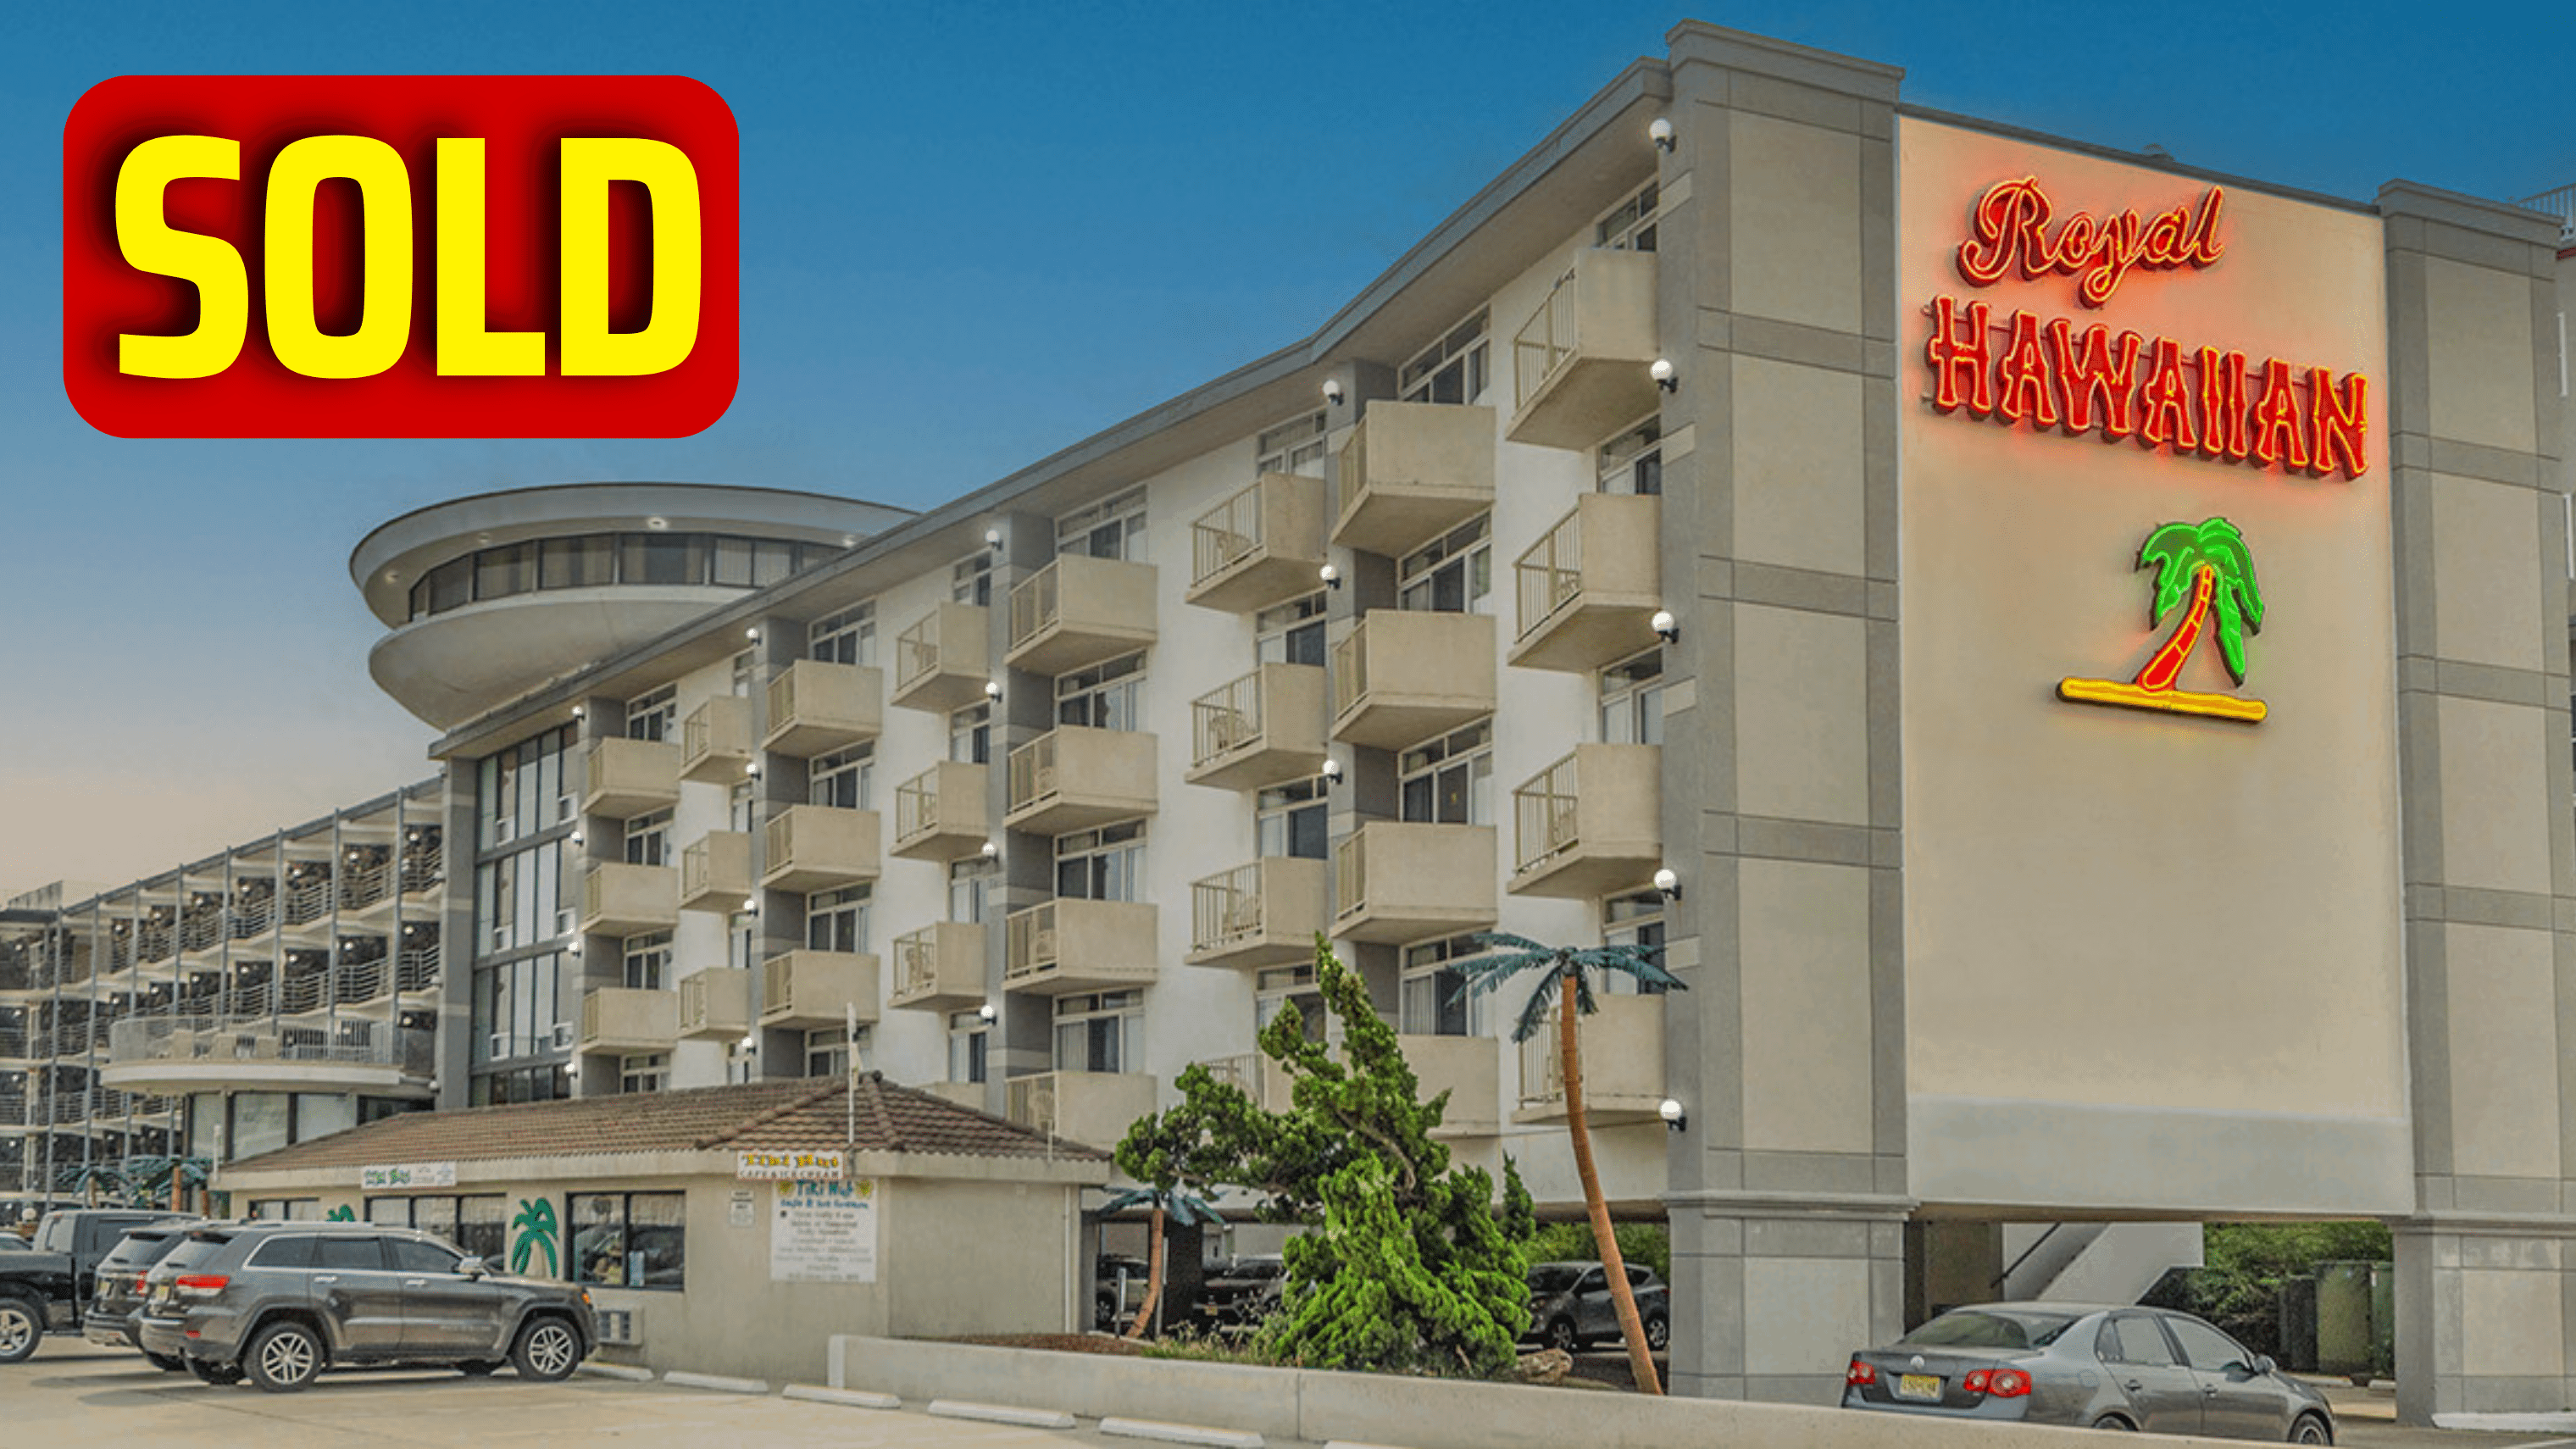 Royal Hawaiian Motel To Transform into Madison Resorts